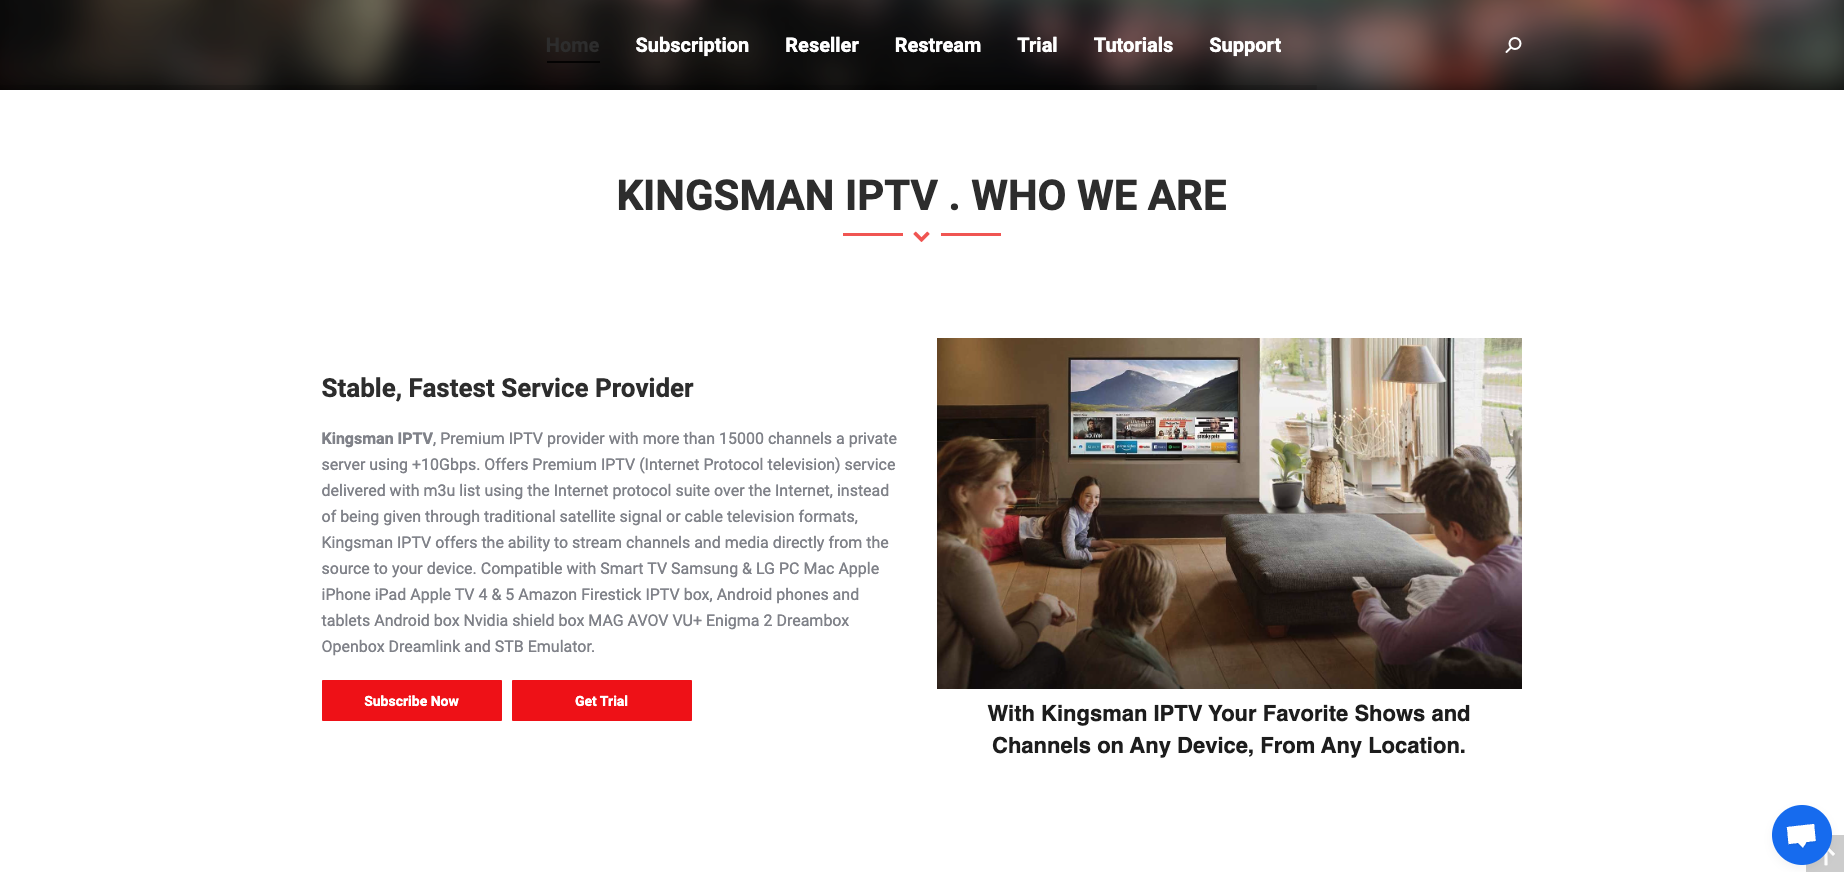 How to install Kingsman IPTV